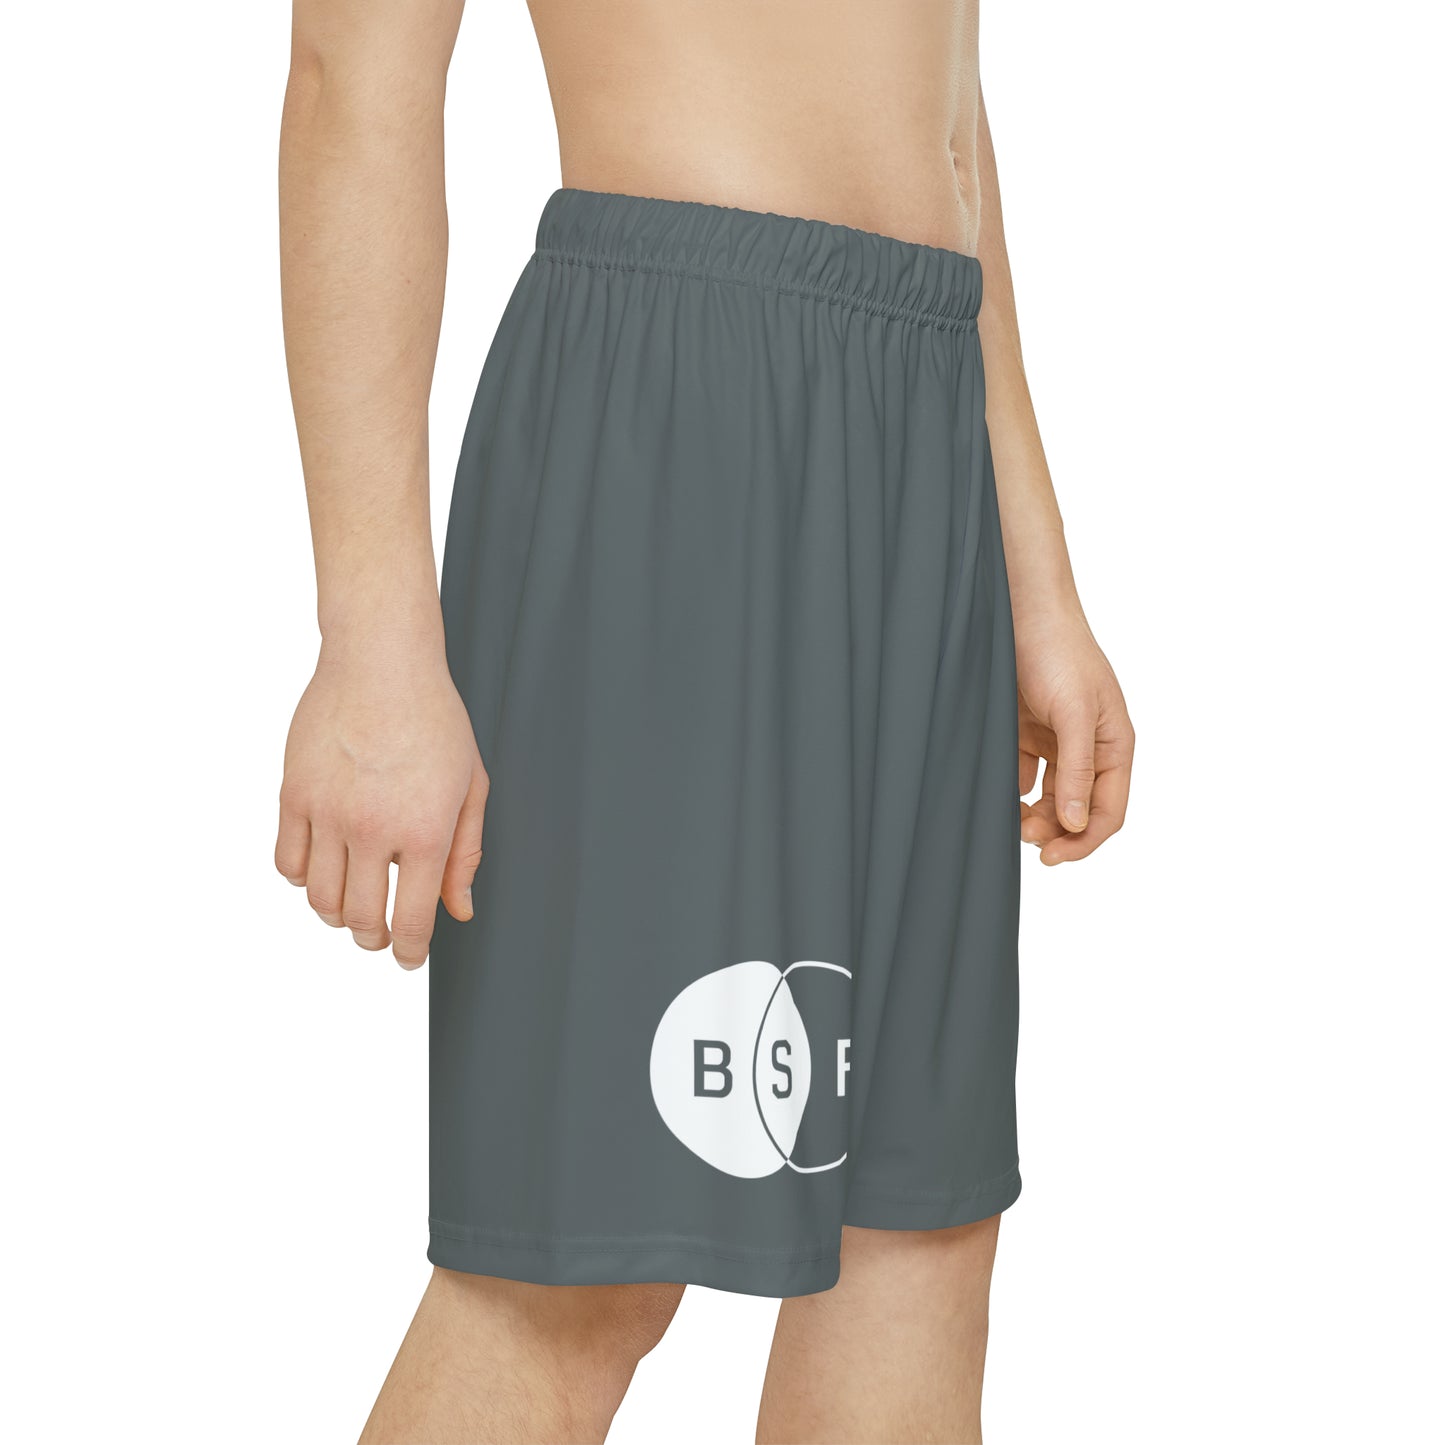 Grey Men’s Sports Shorts (AOP)